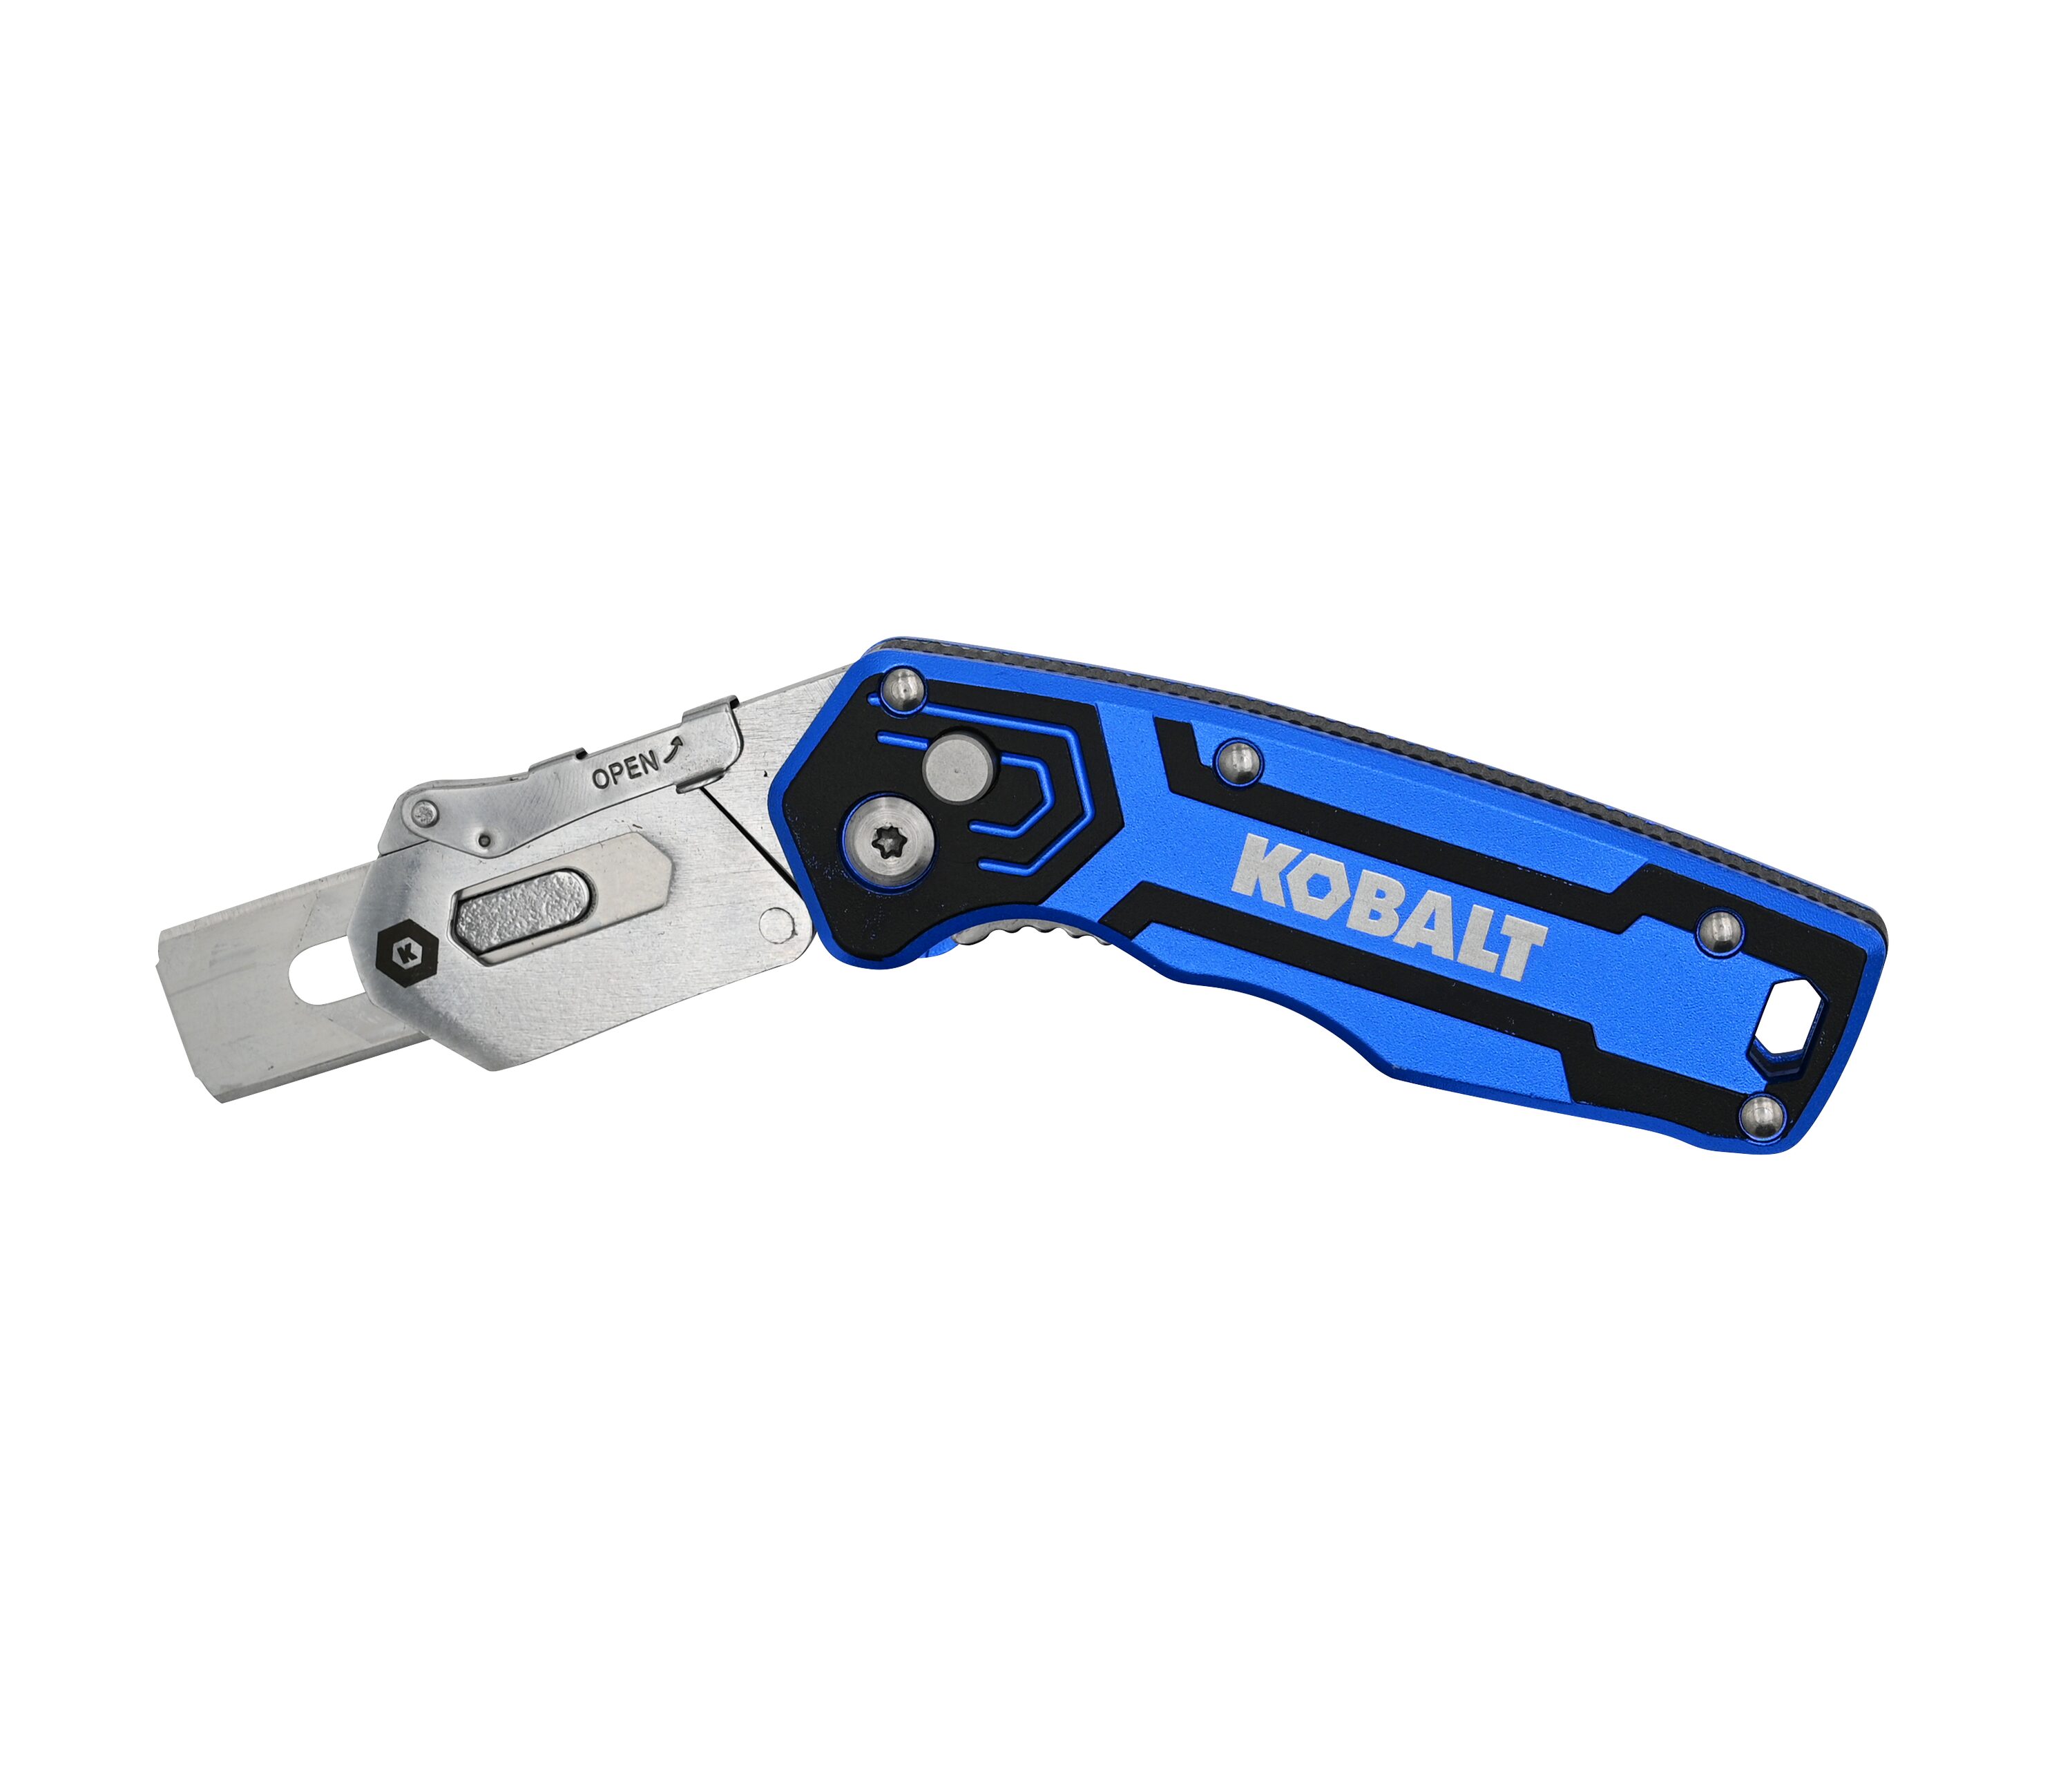 Kobalt Lockback 3/4-in 11-Blade Folding Utility Knife in the Utility Knives  department at